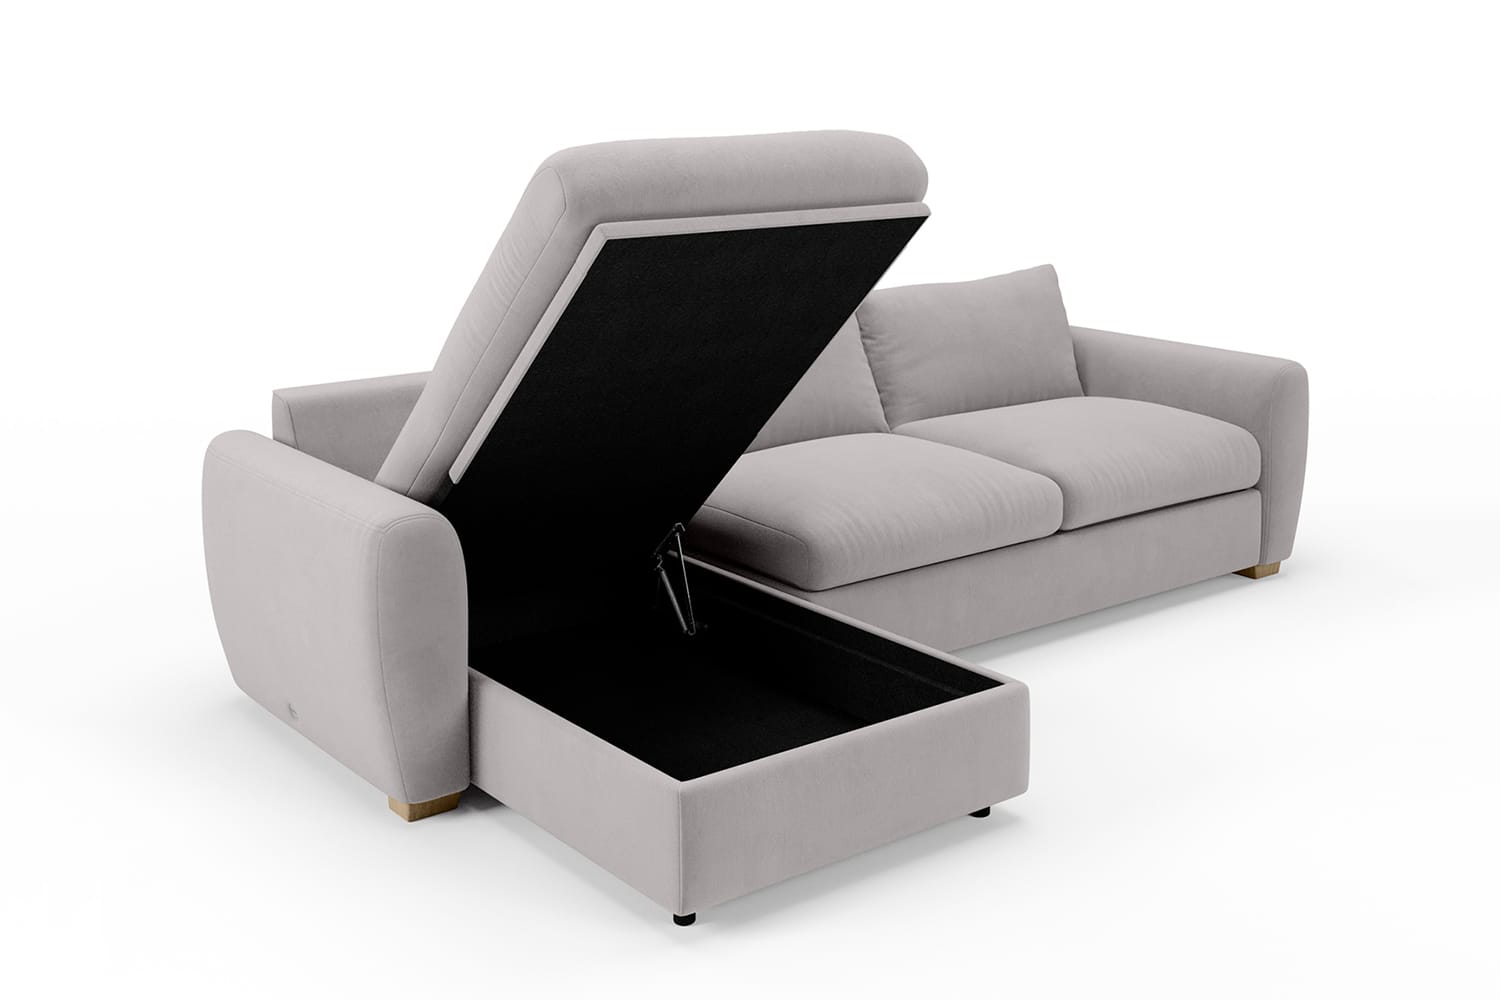 SNUG | The Cloud Sundae Chaise Corner Sofa in Warm Grey variant_40414970314800